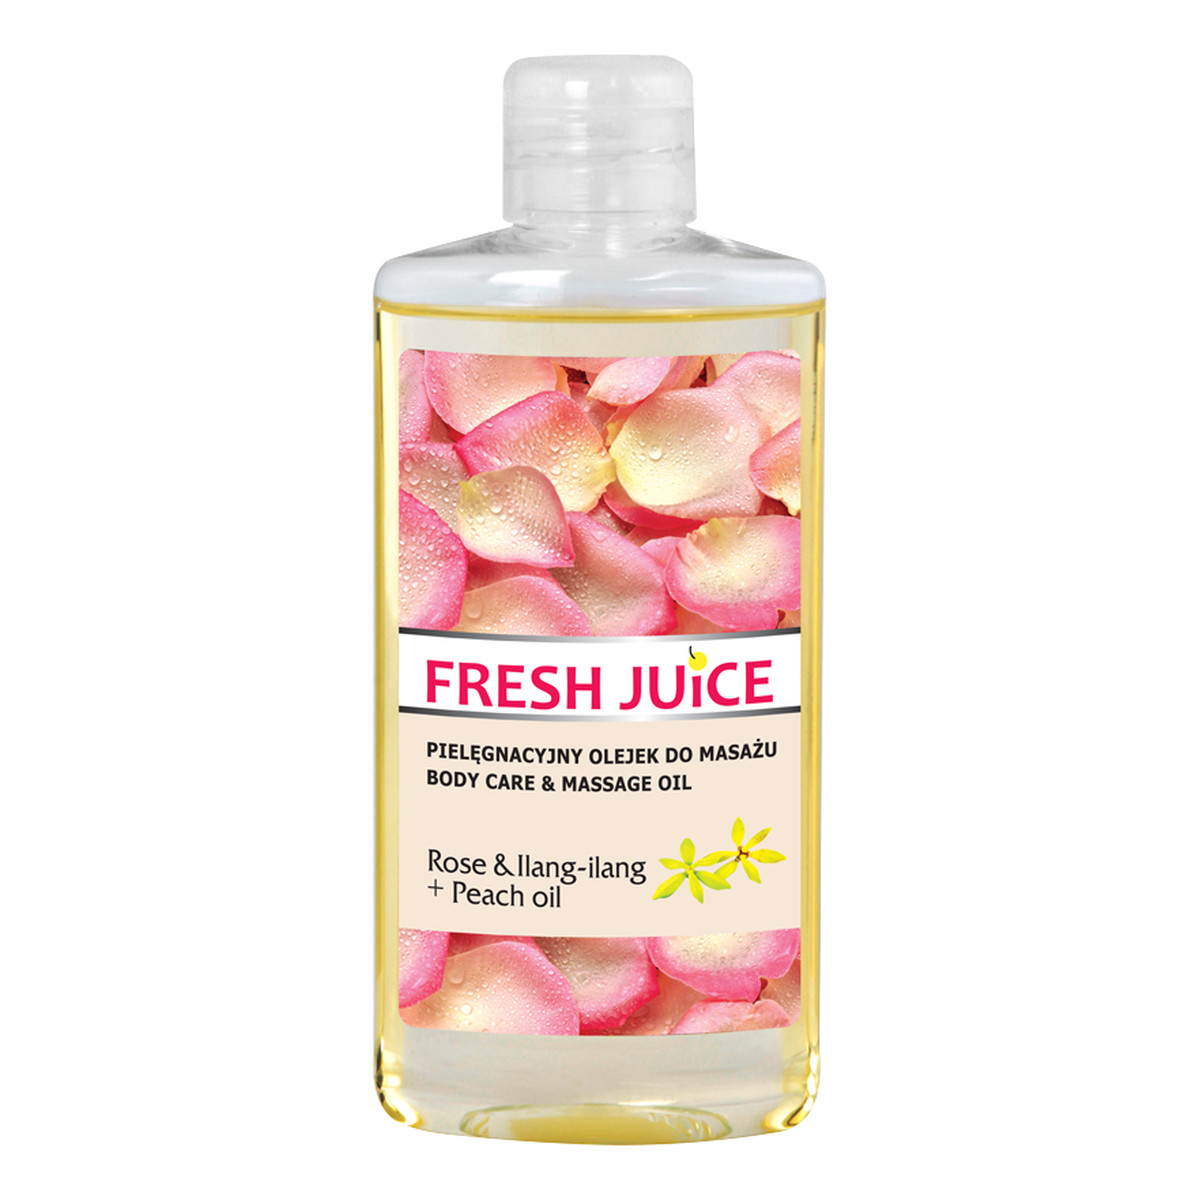 Fresh Juice Rose & Ilang - Ilang + Peach oil pielęgnacyjny olejek do masażu 150ml